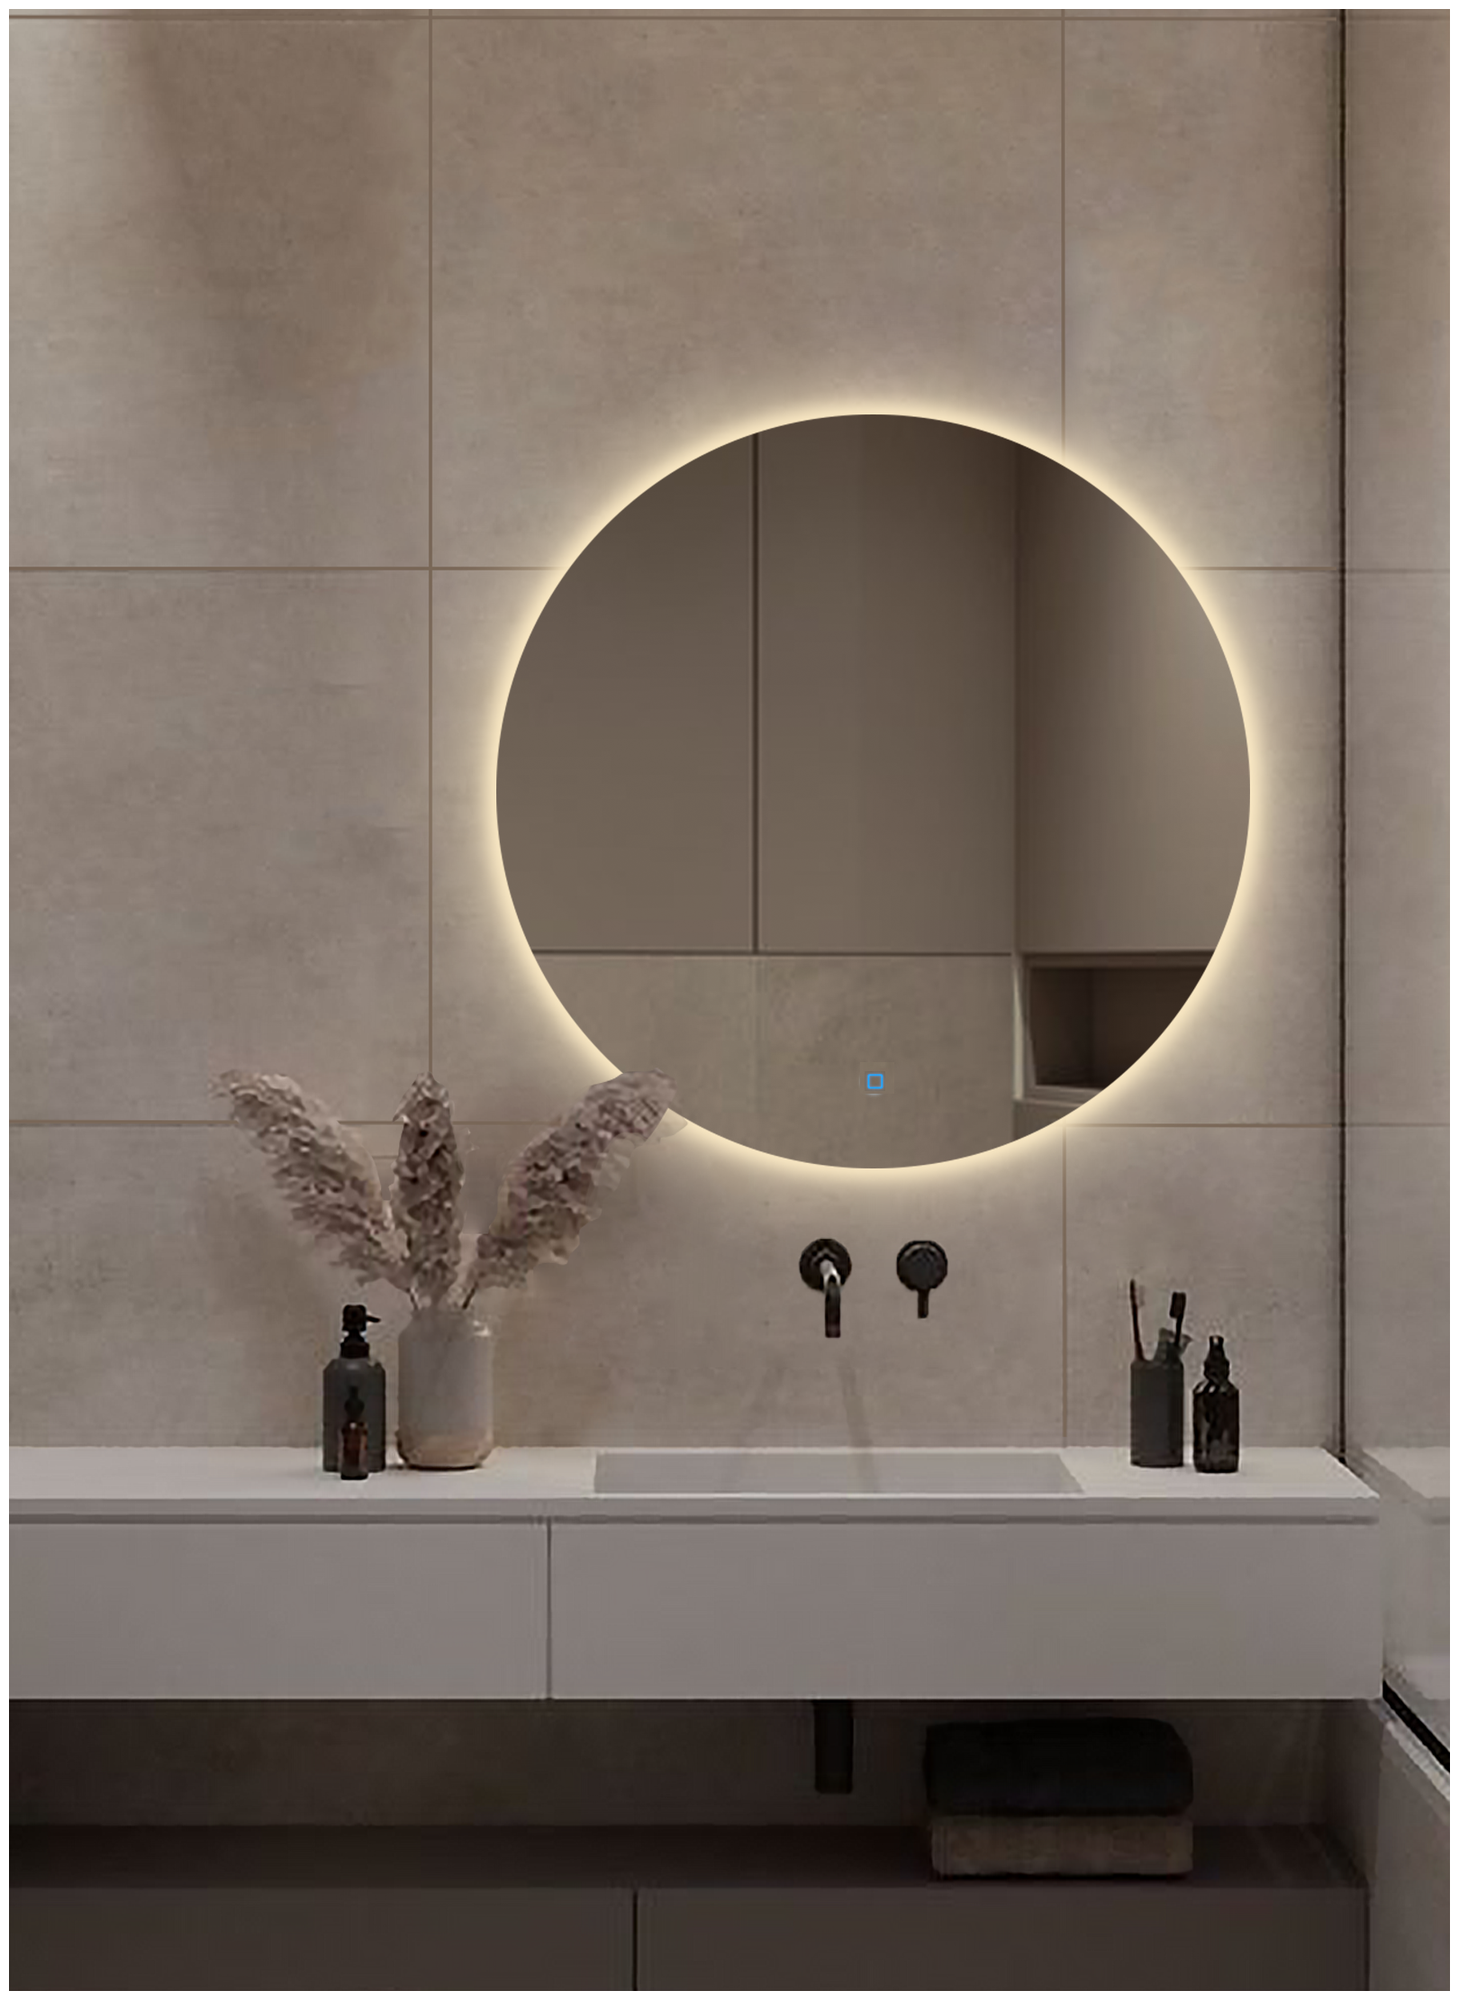 Зеркало для ванной Sun D50 круглое "парящее" с тёплой LED-подсветкой